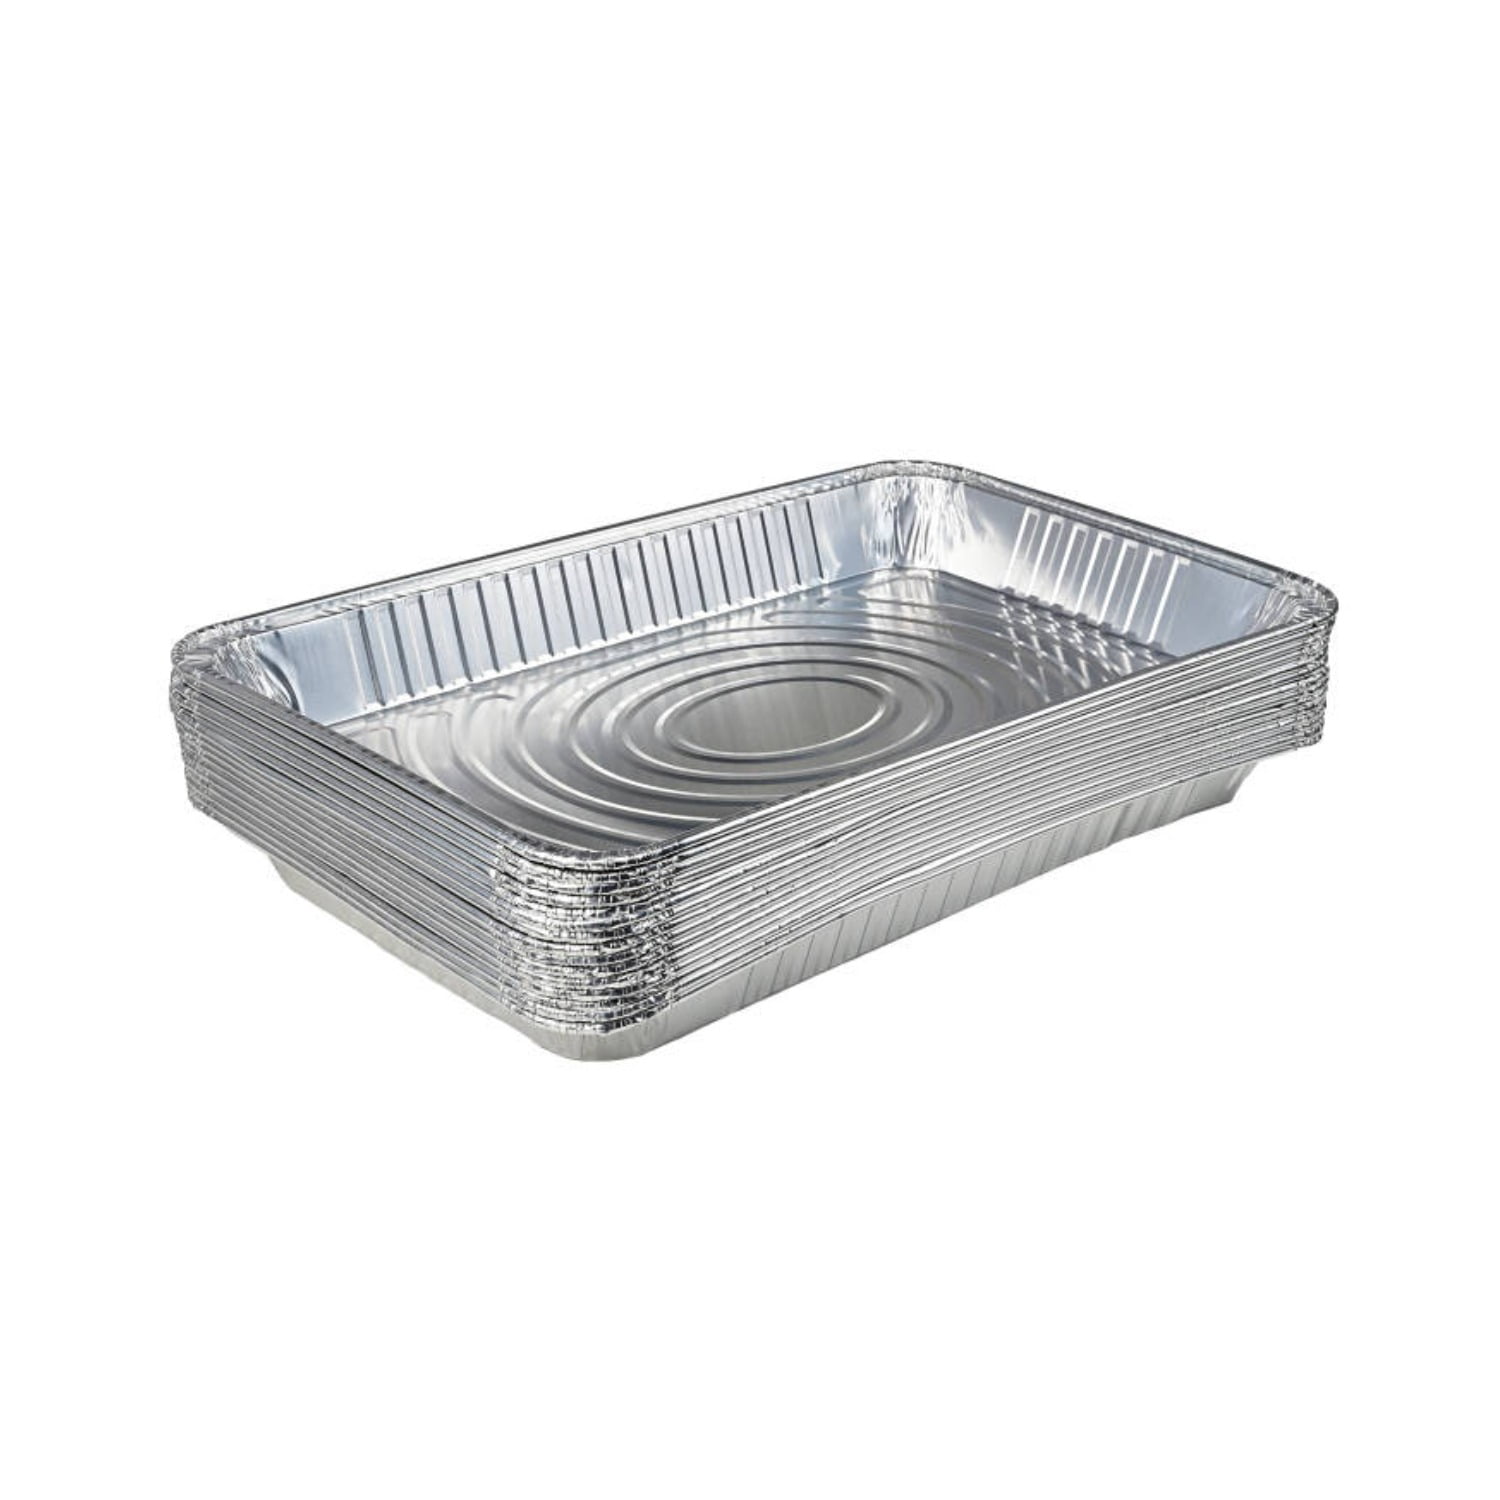 VeZee's Disposable 9X13 Aluminum Foil/Pan Pans Half Size Deep Steam Table  Bakeware - Cookware Perfect for Baking Cakes, Bread, Meatloaf,  Lasagna:100CT 